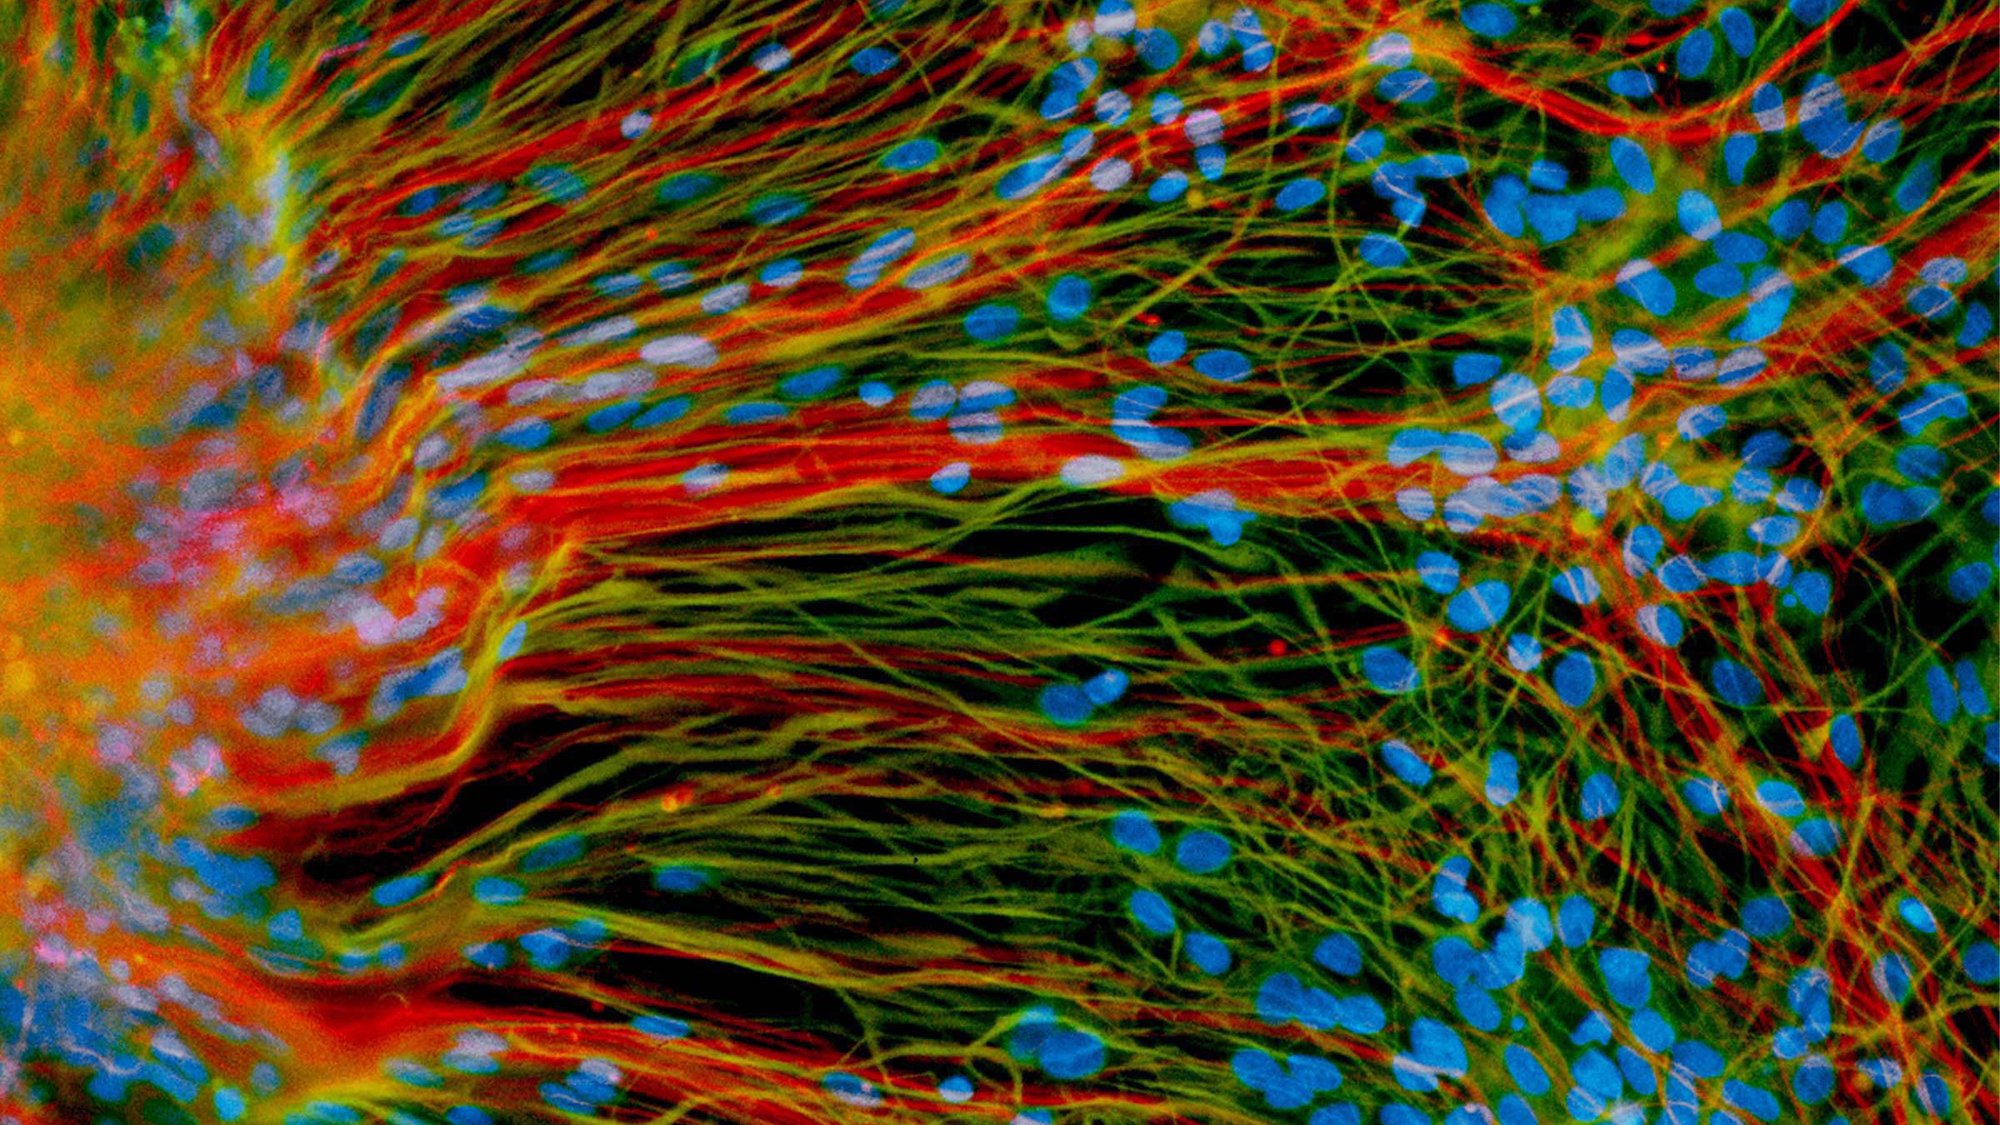 Neurones (vermell) i cèl·lules glia (verd) cultivades al laboratori a partir de cèl.lules mare embrionàries humanes. Imatge del Zhang’s lab, UW-Madison.